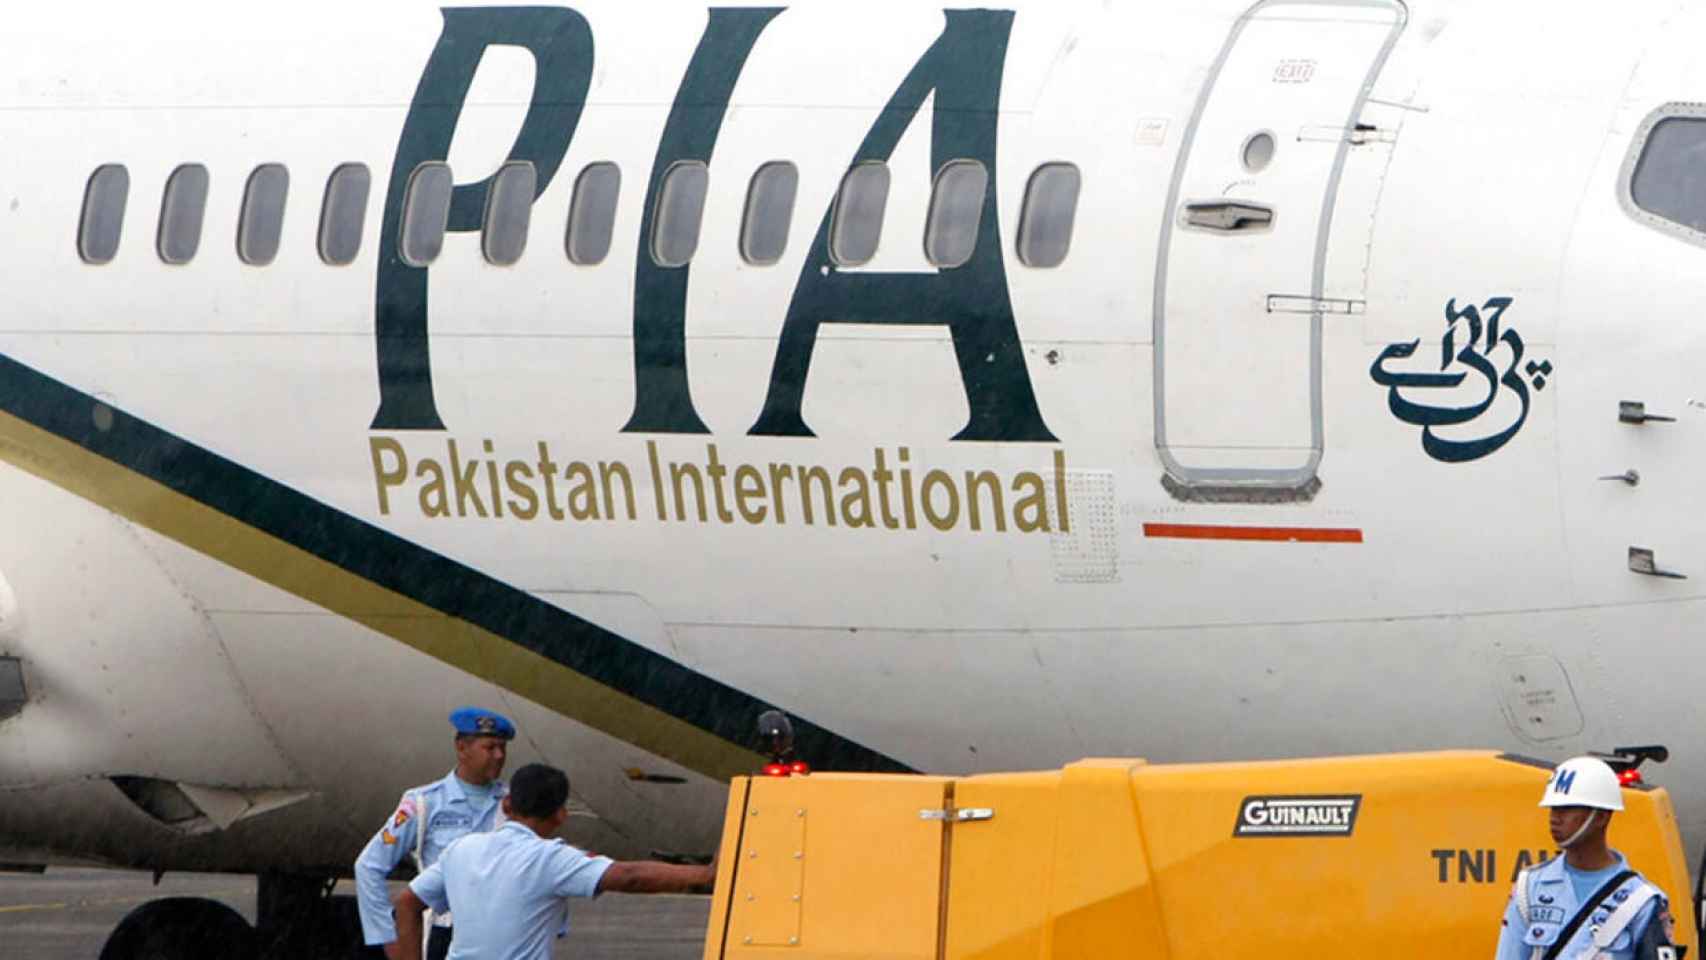 Un avión se estrella en Pakistán con 107 personas a bordo.